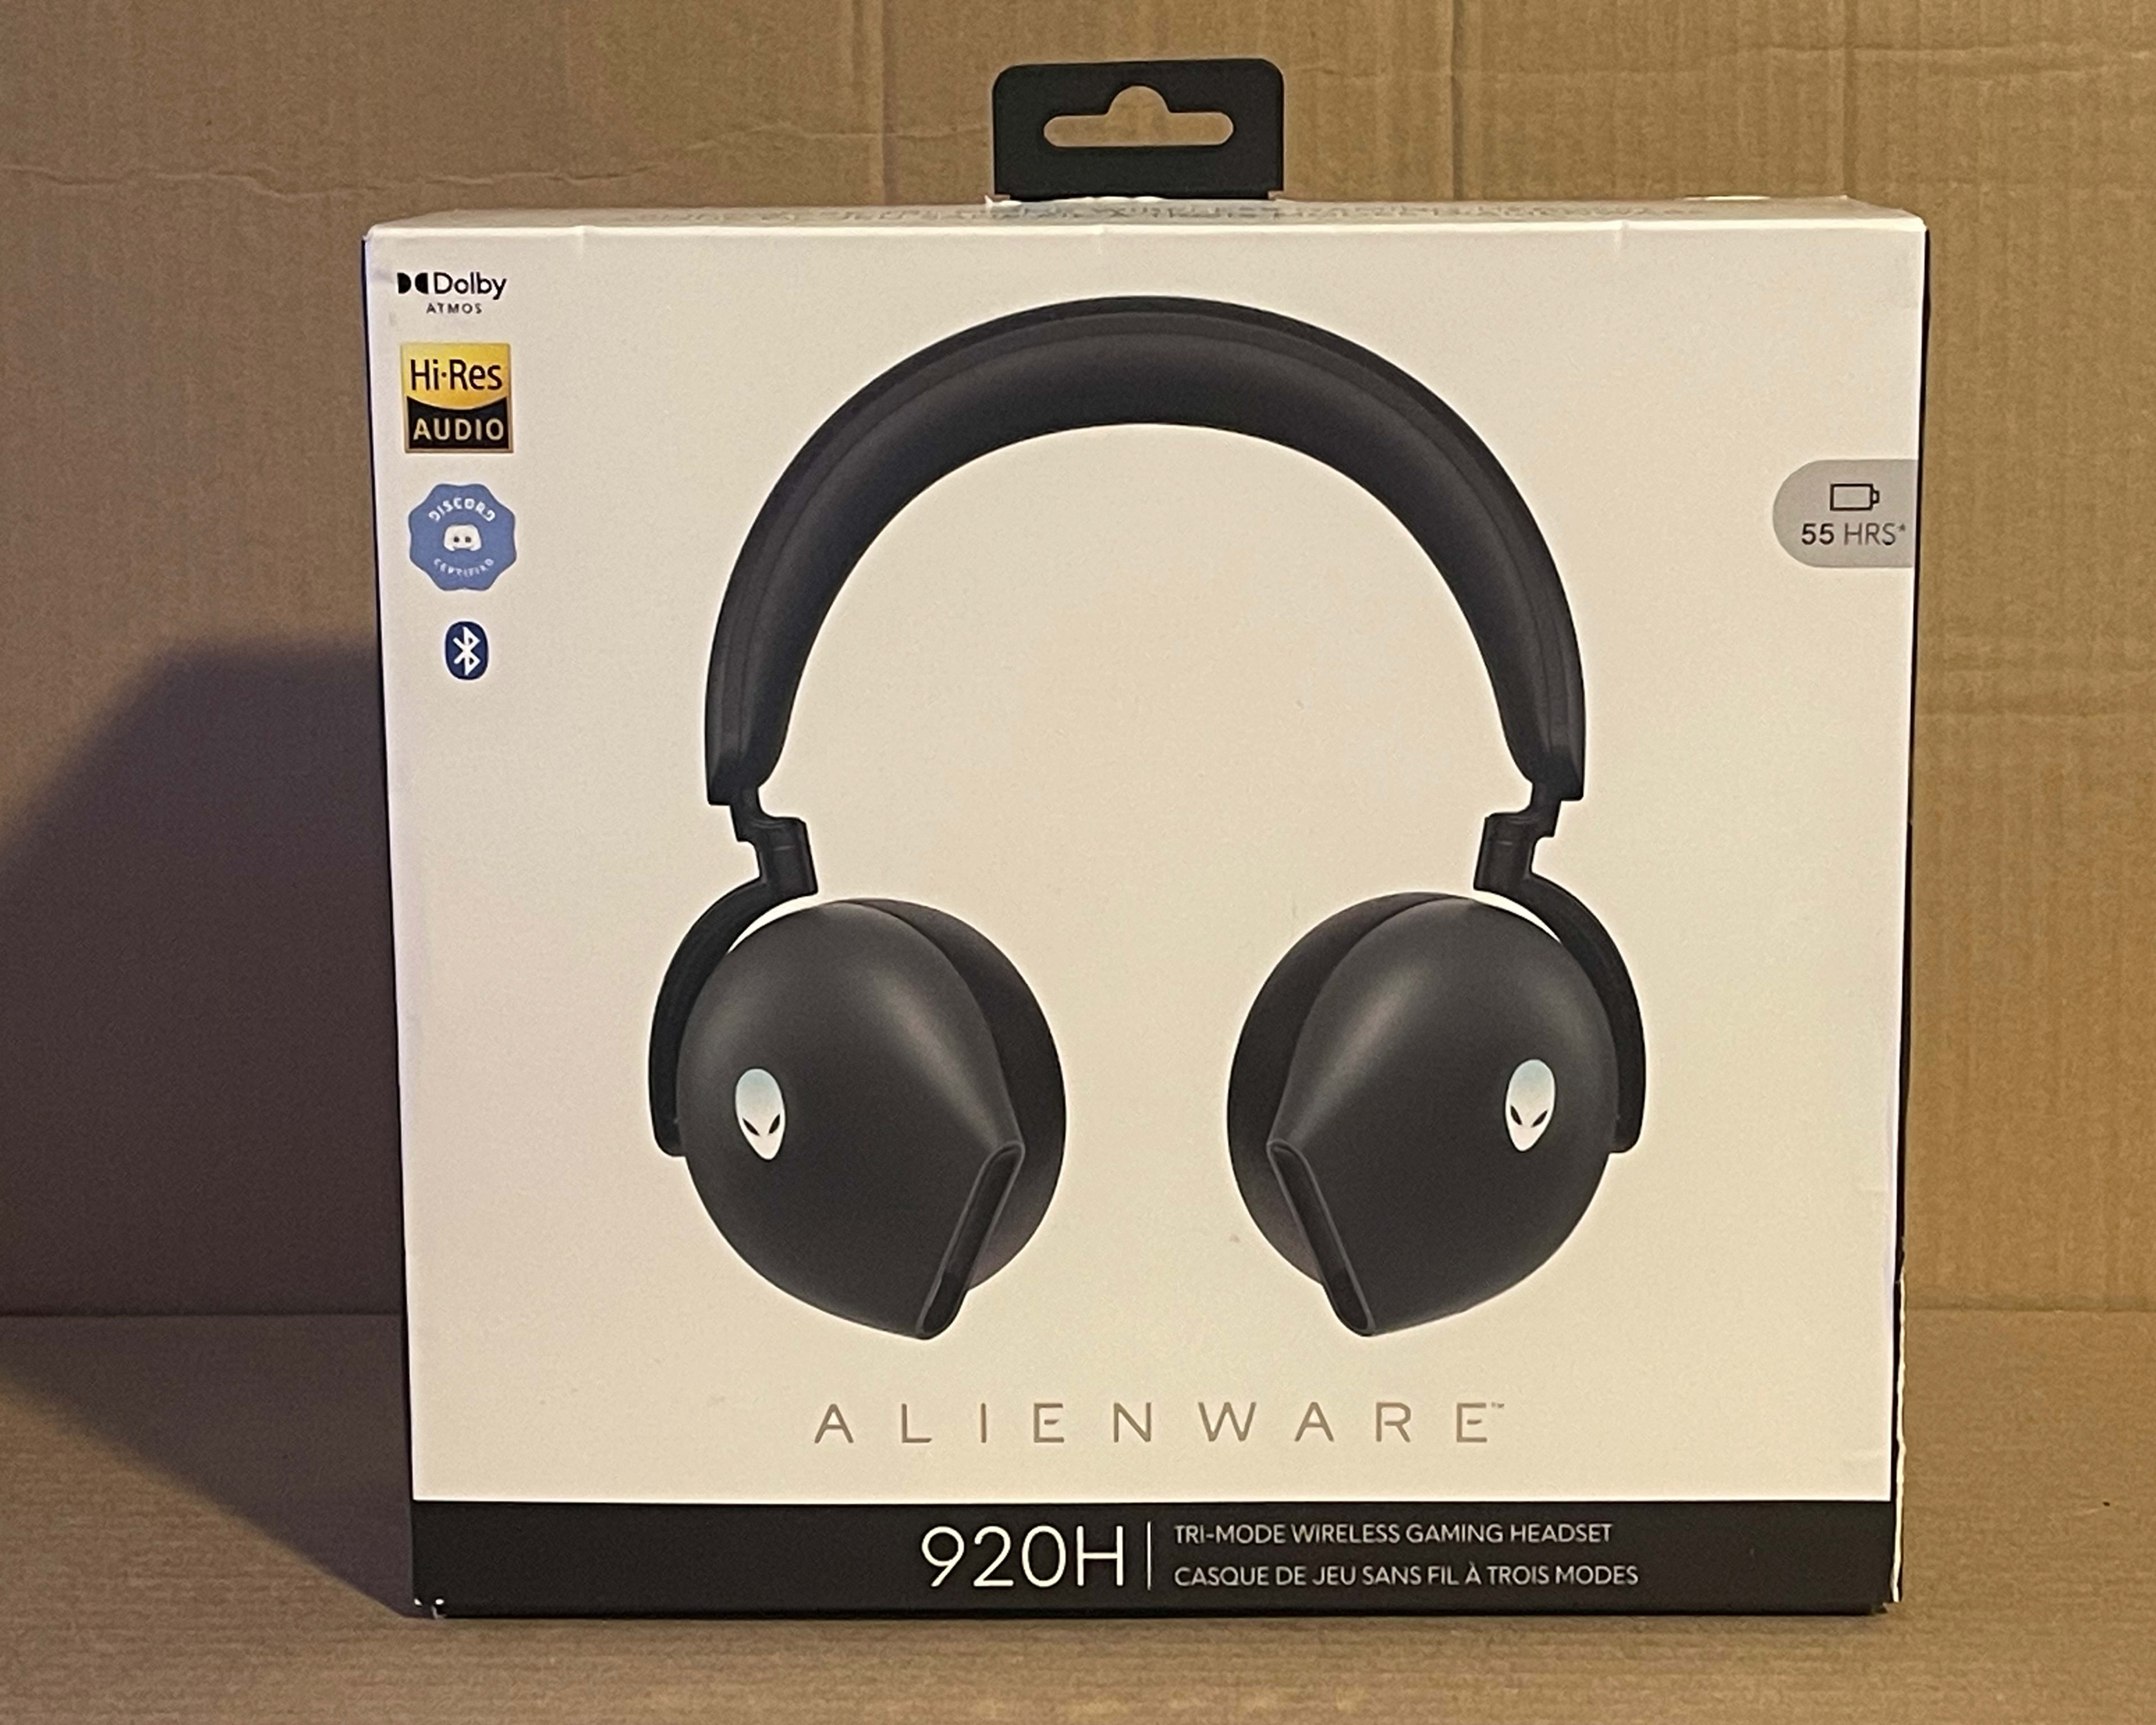 Alienware 920H Wireless Gaming Headset - Dark Side of the Moon